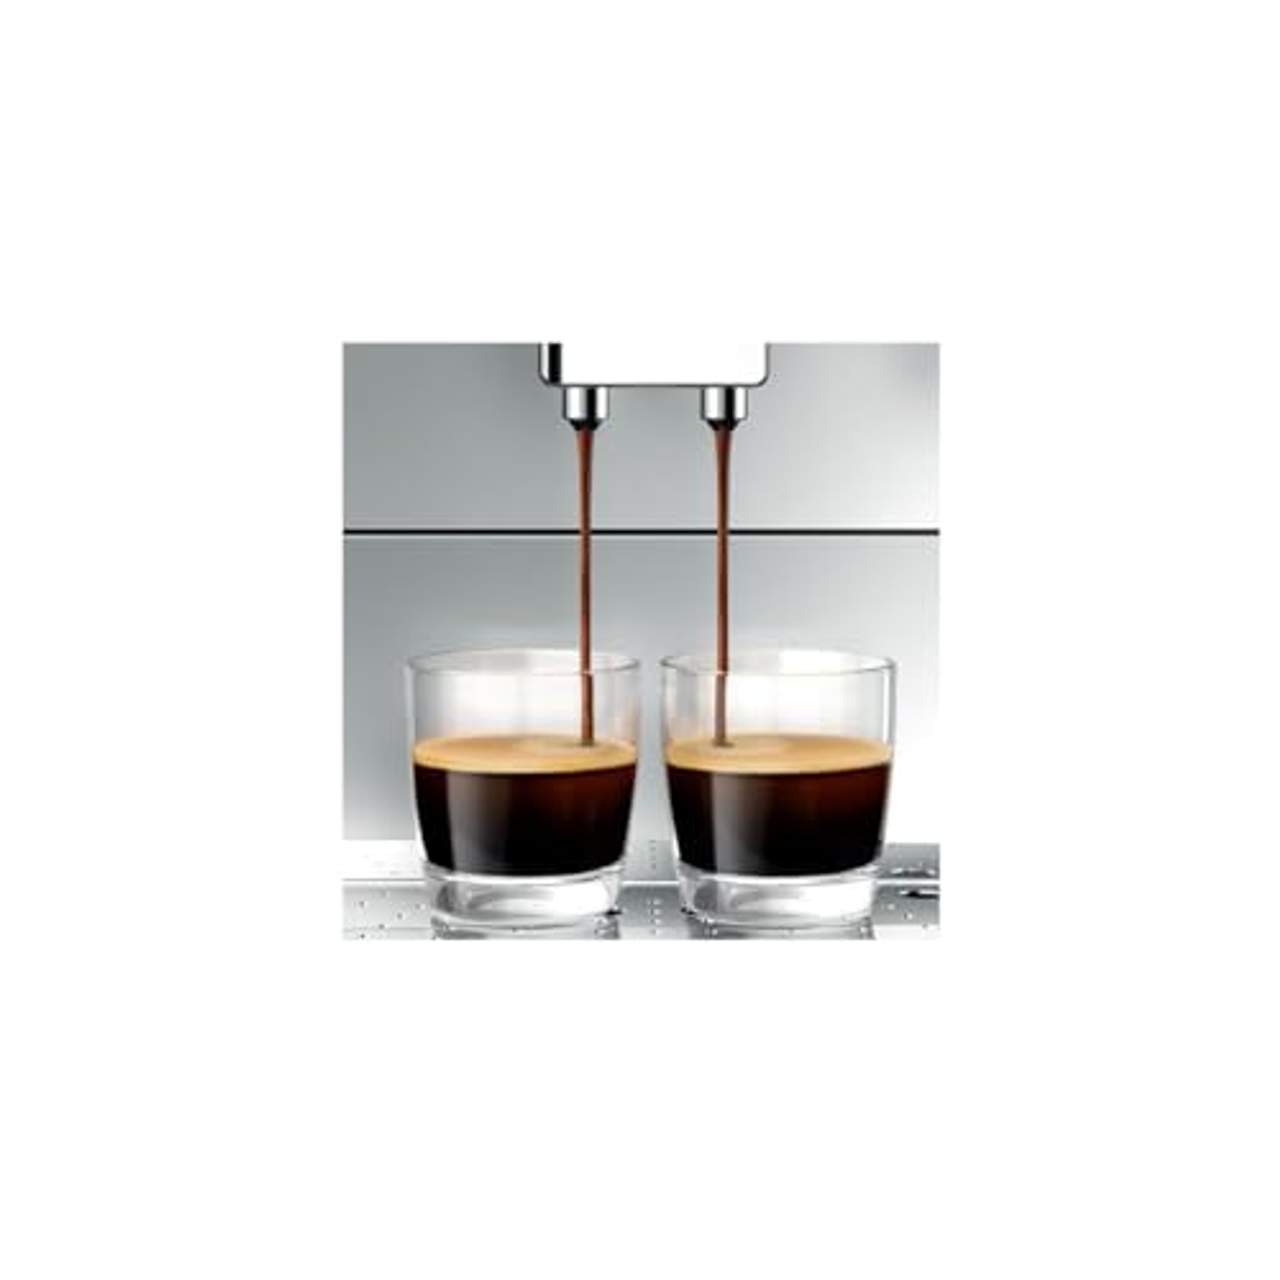 Melitta Caffeo Solo & Perfect Milk E957-103 Schlanker Kaffeevollautomat